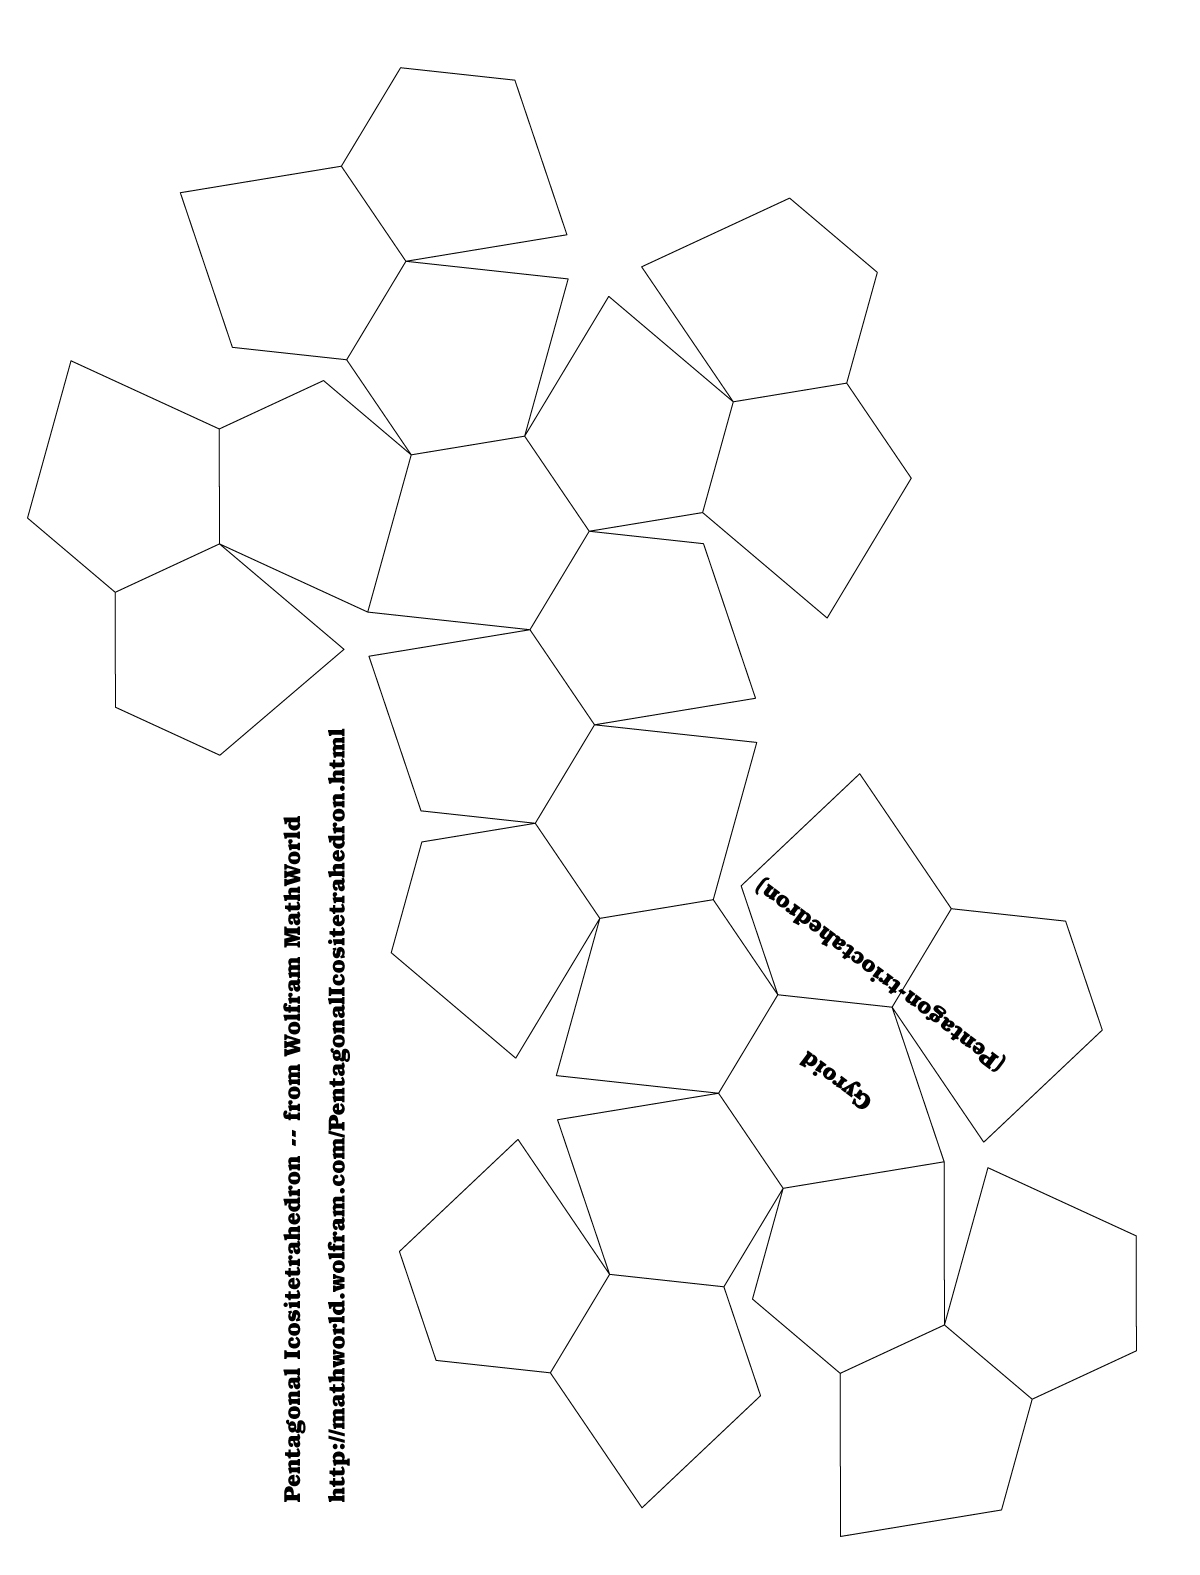 Folding -- from Wolfram MathWorld